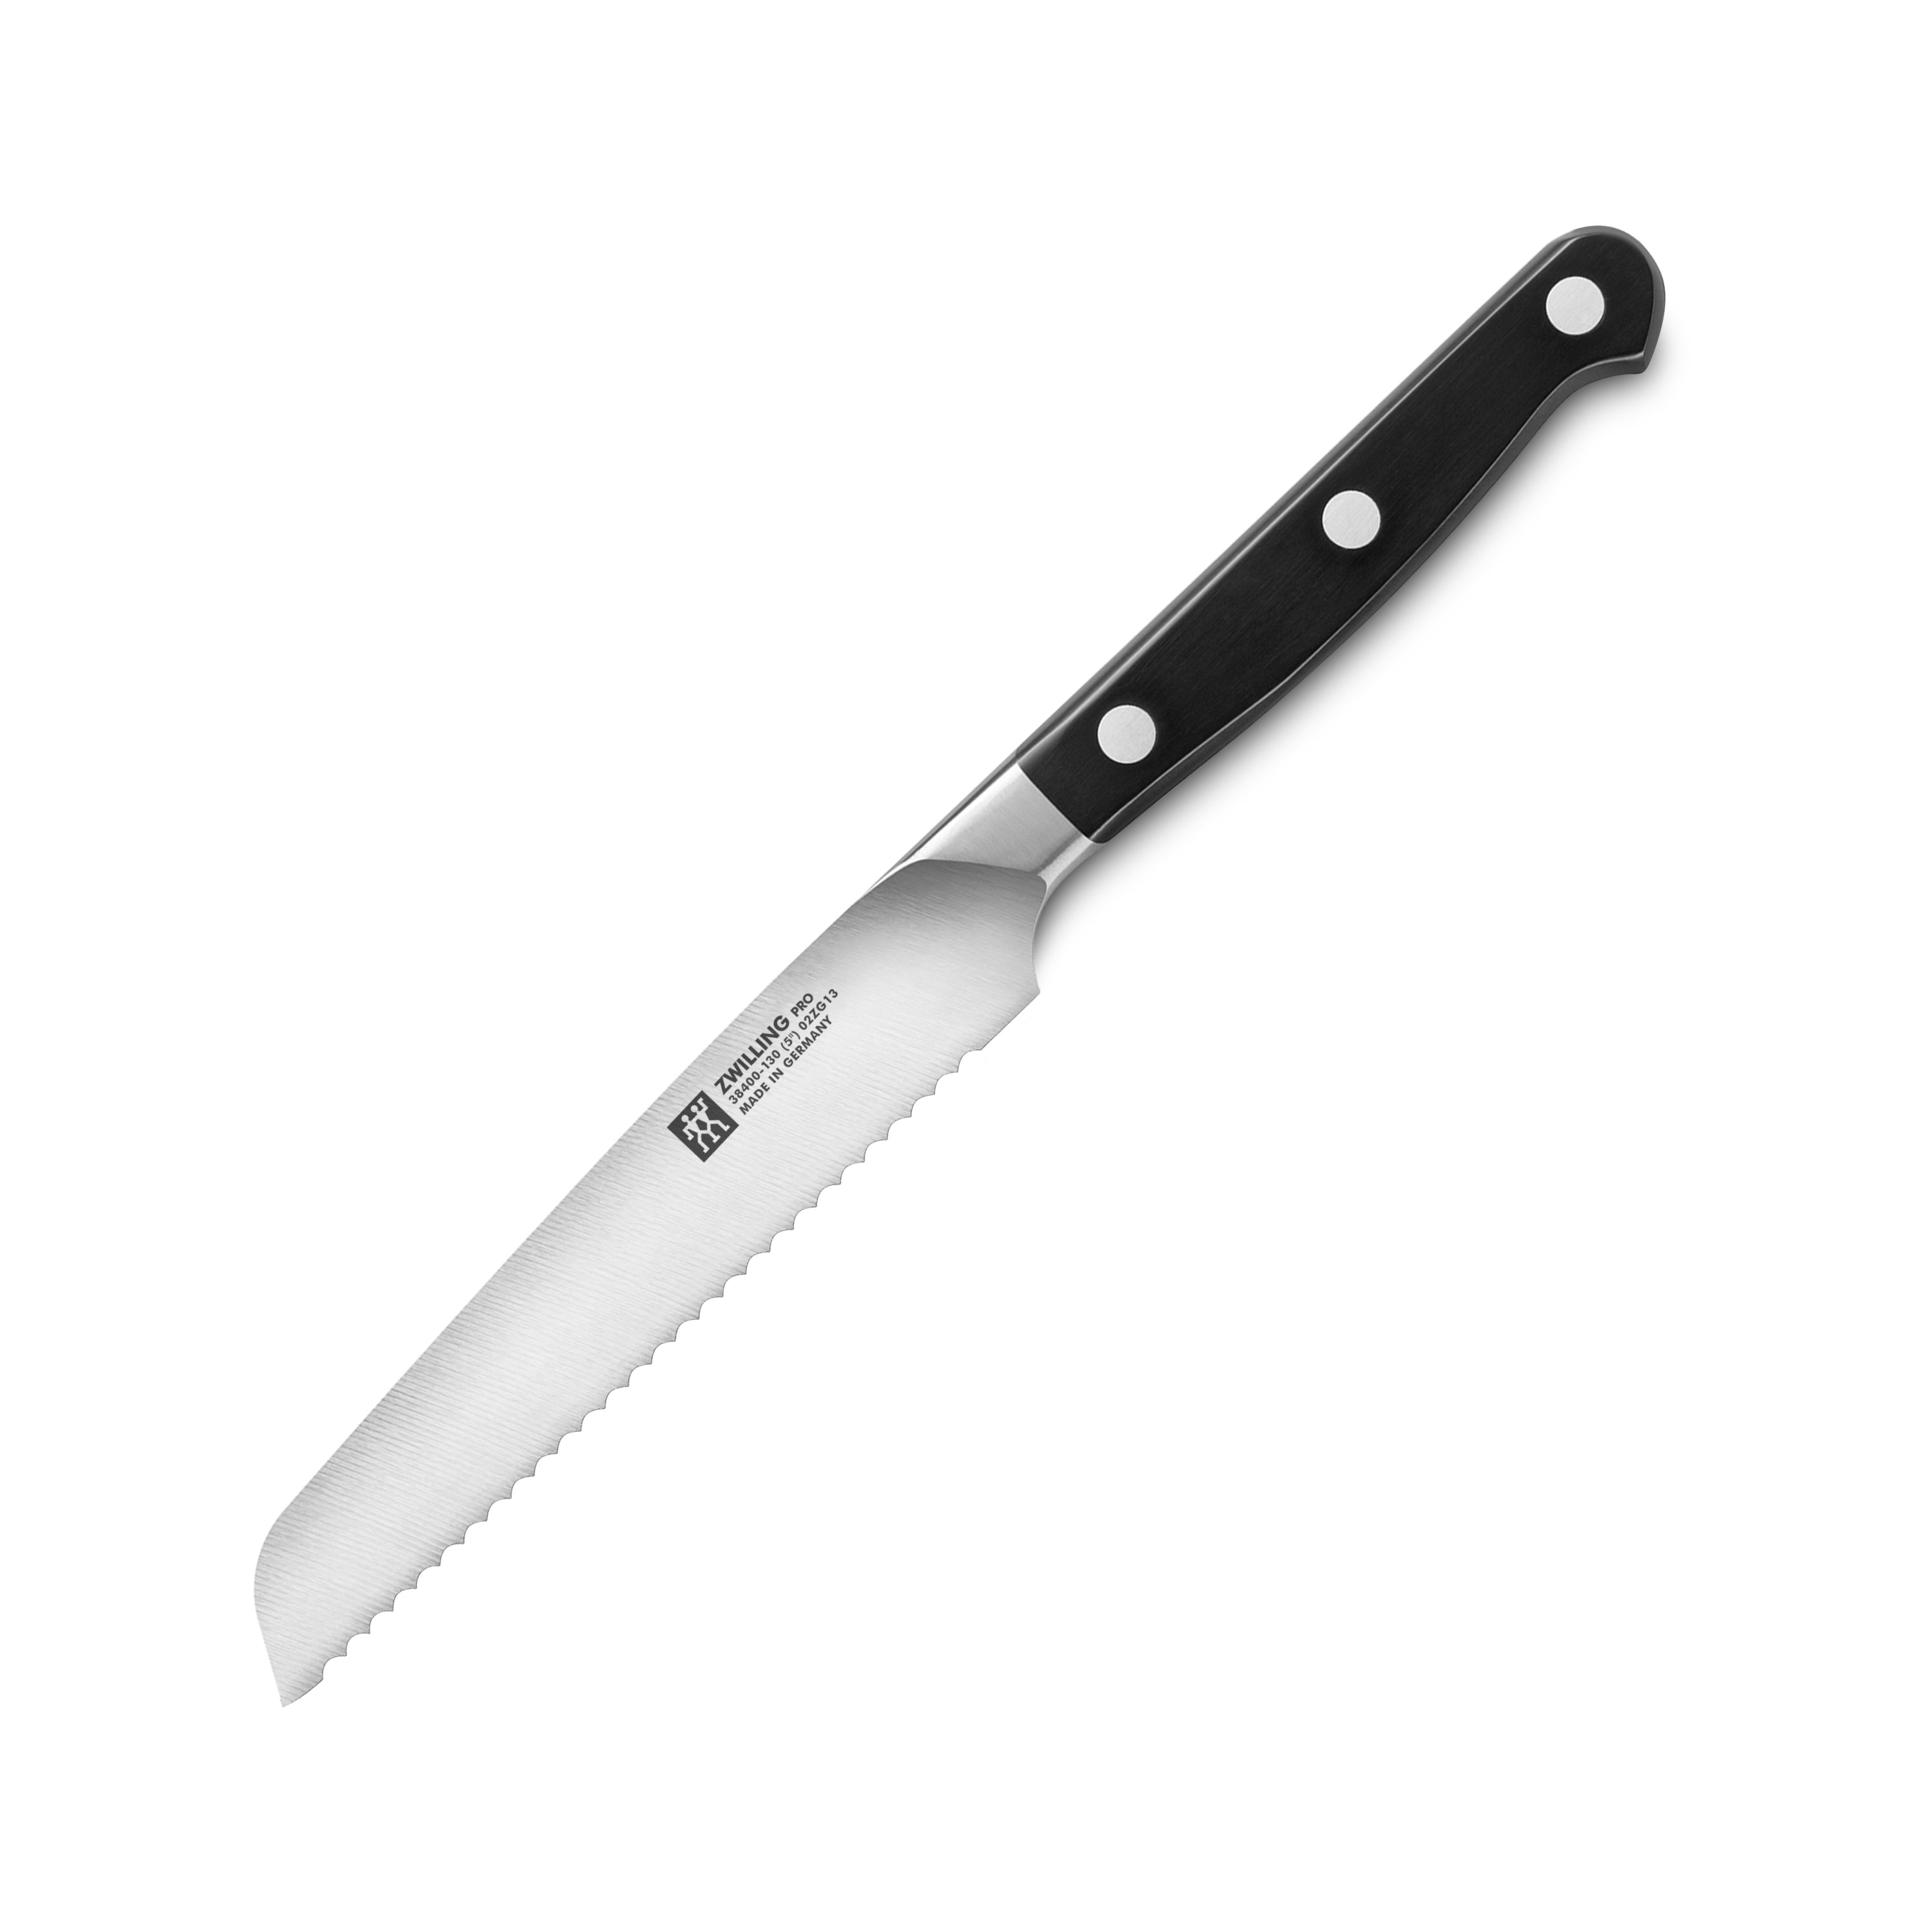 Zwilling - Pro Le Blanc 5 Serrated Utility Knife